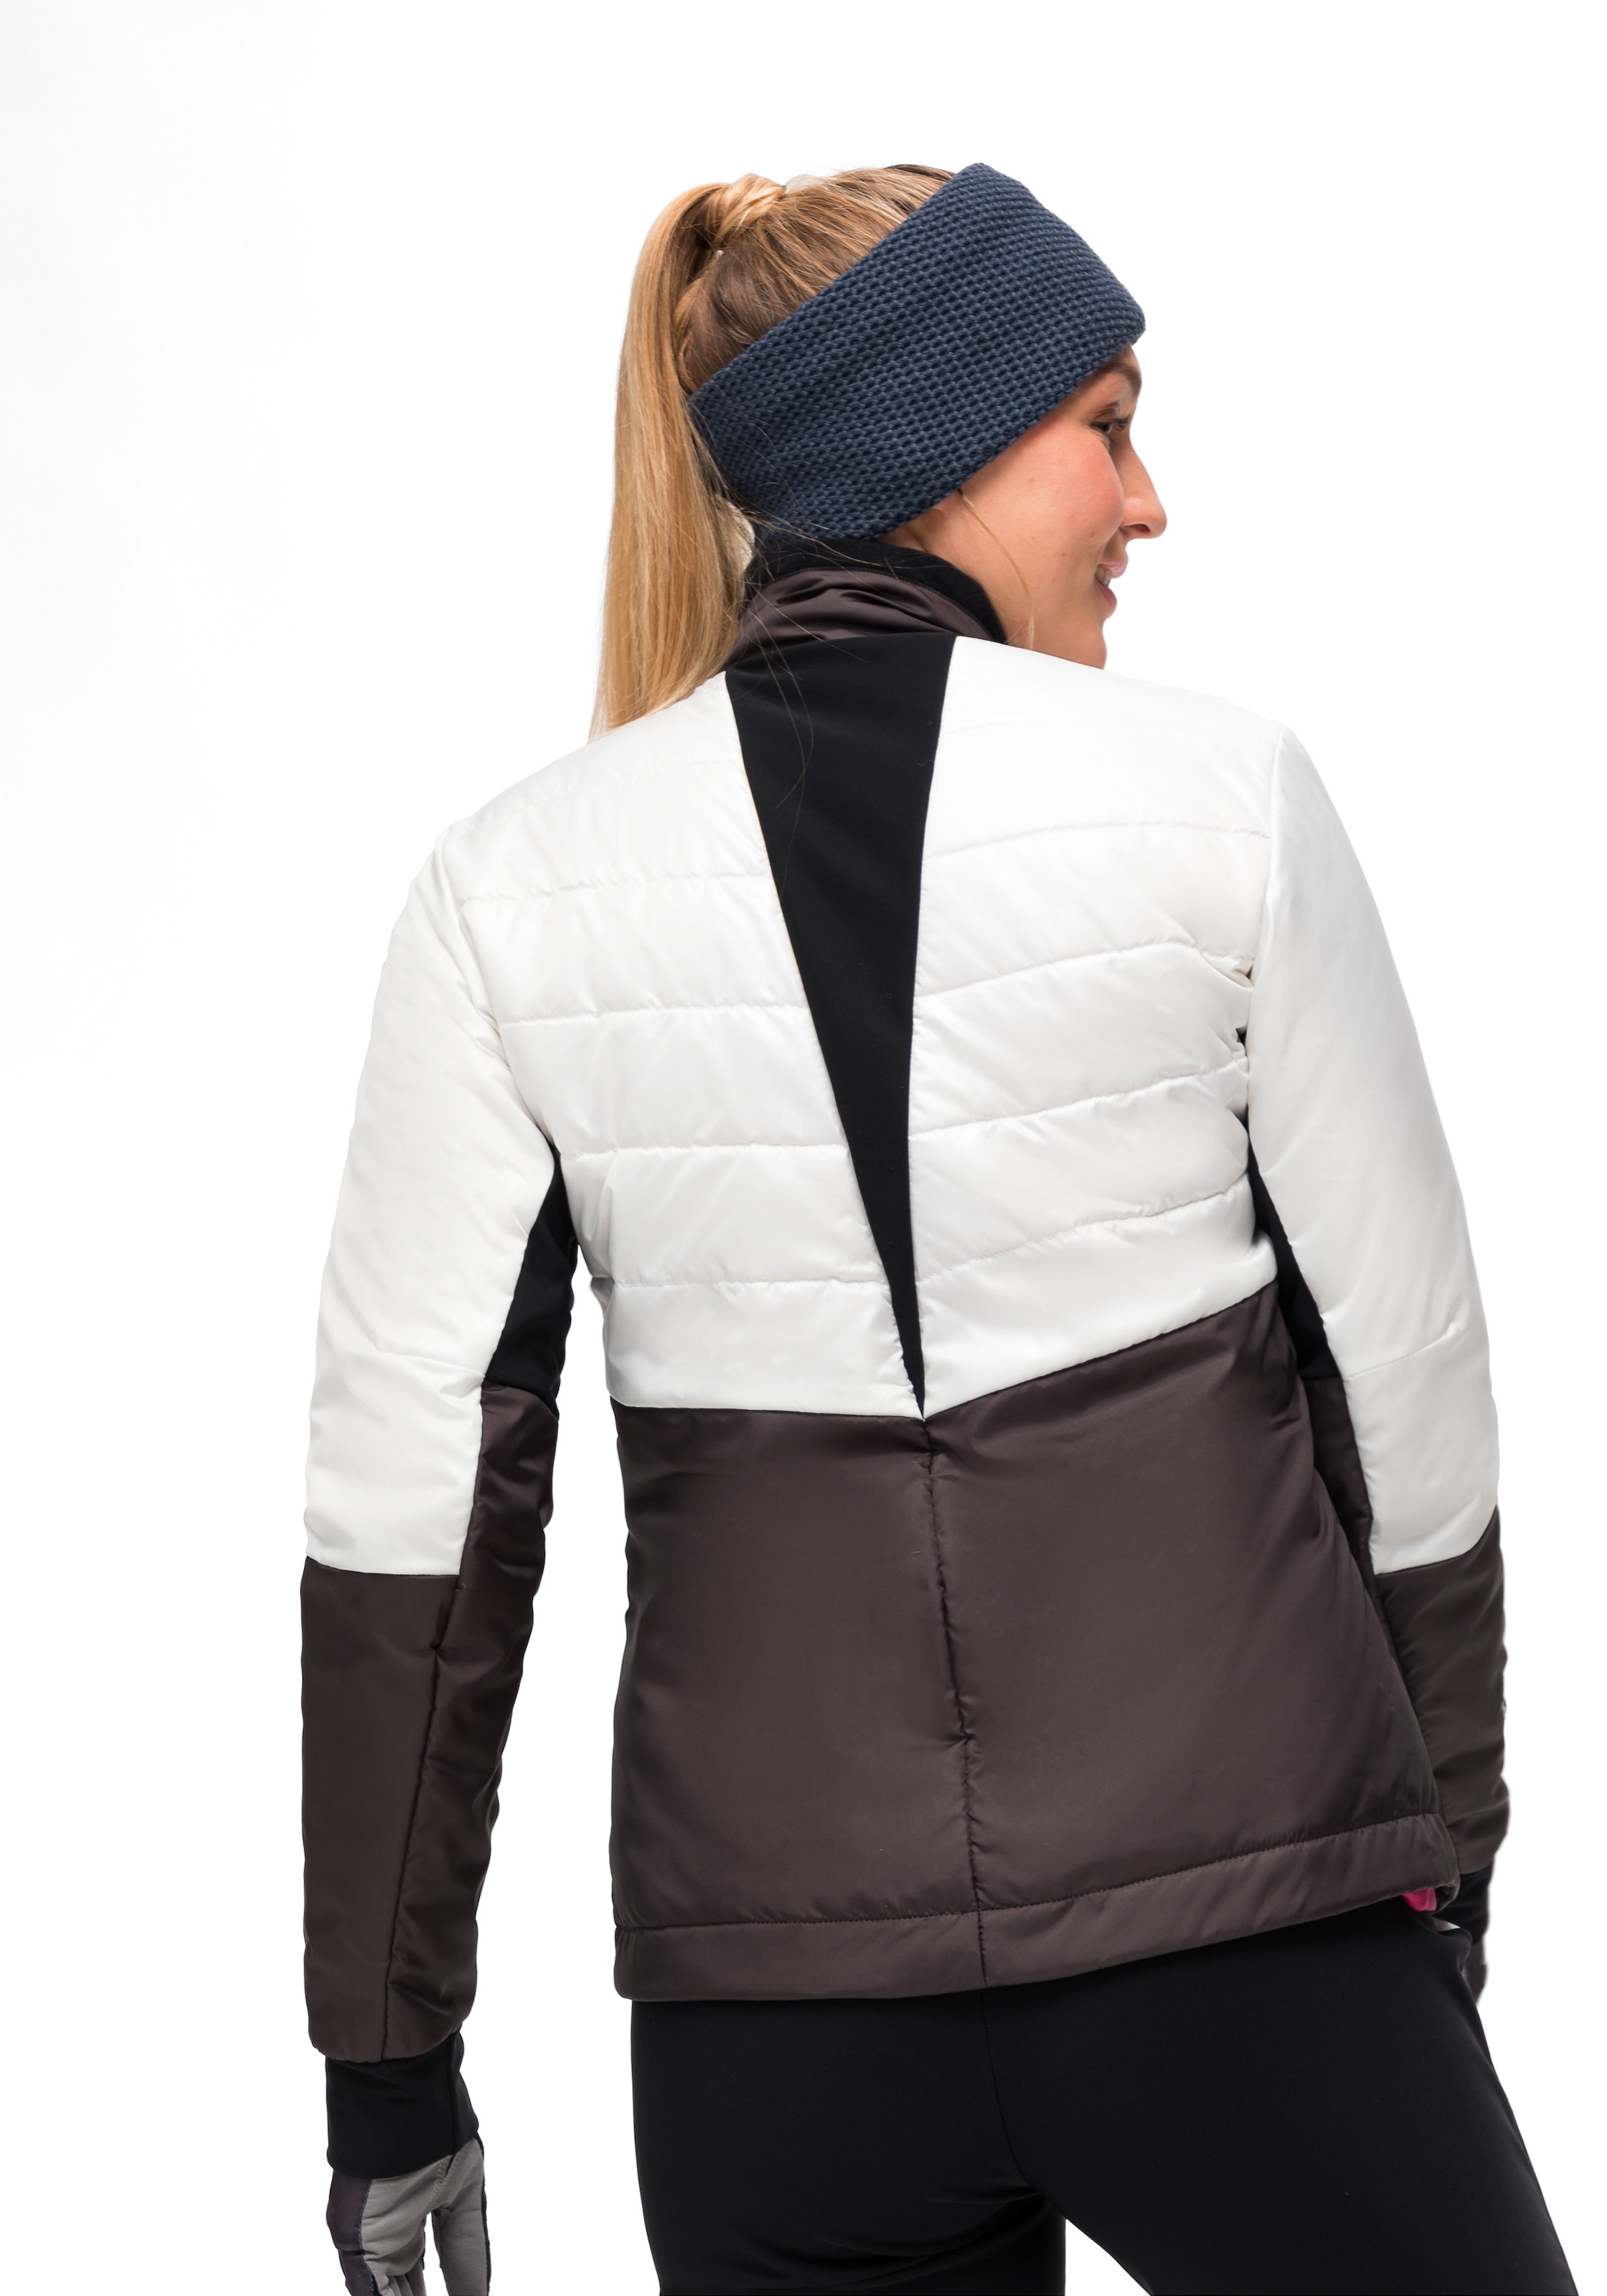 Maier Sports Skijacke »Skjoma Wool W«, Damen Langlaufjacke, wattierte Outdoorjacke mit 3 geräumige Taschen